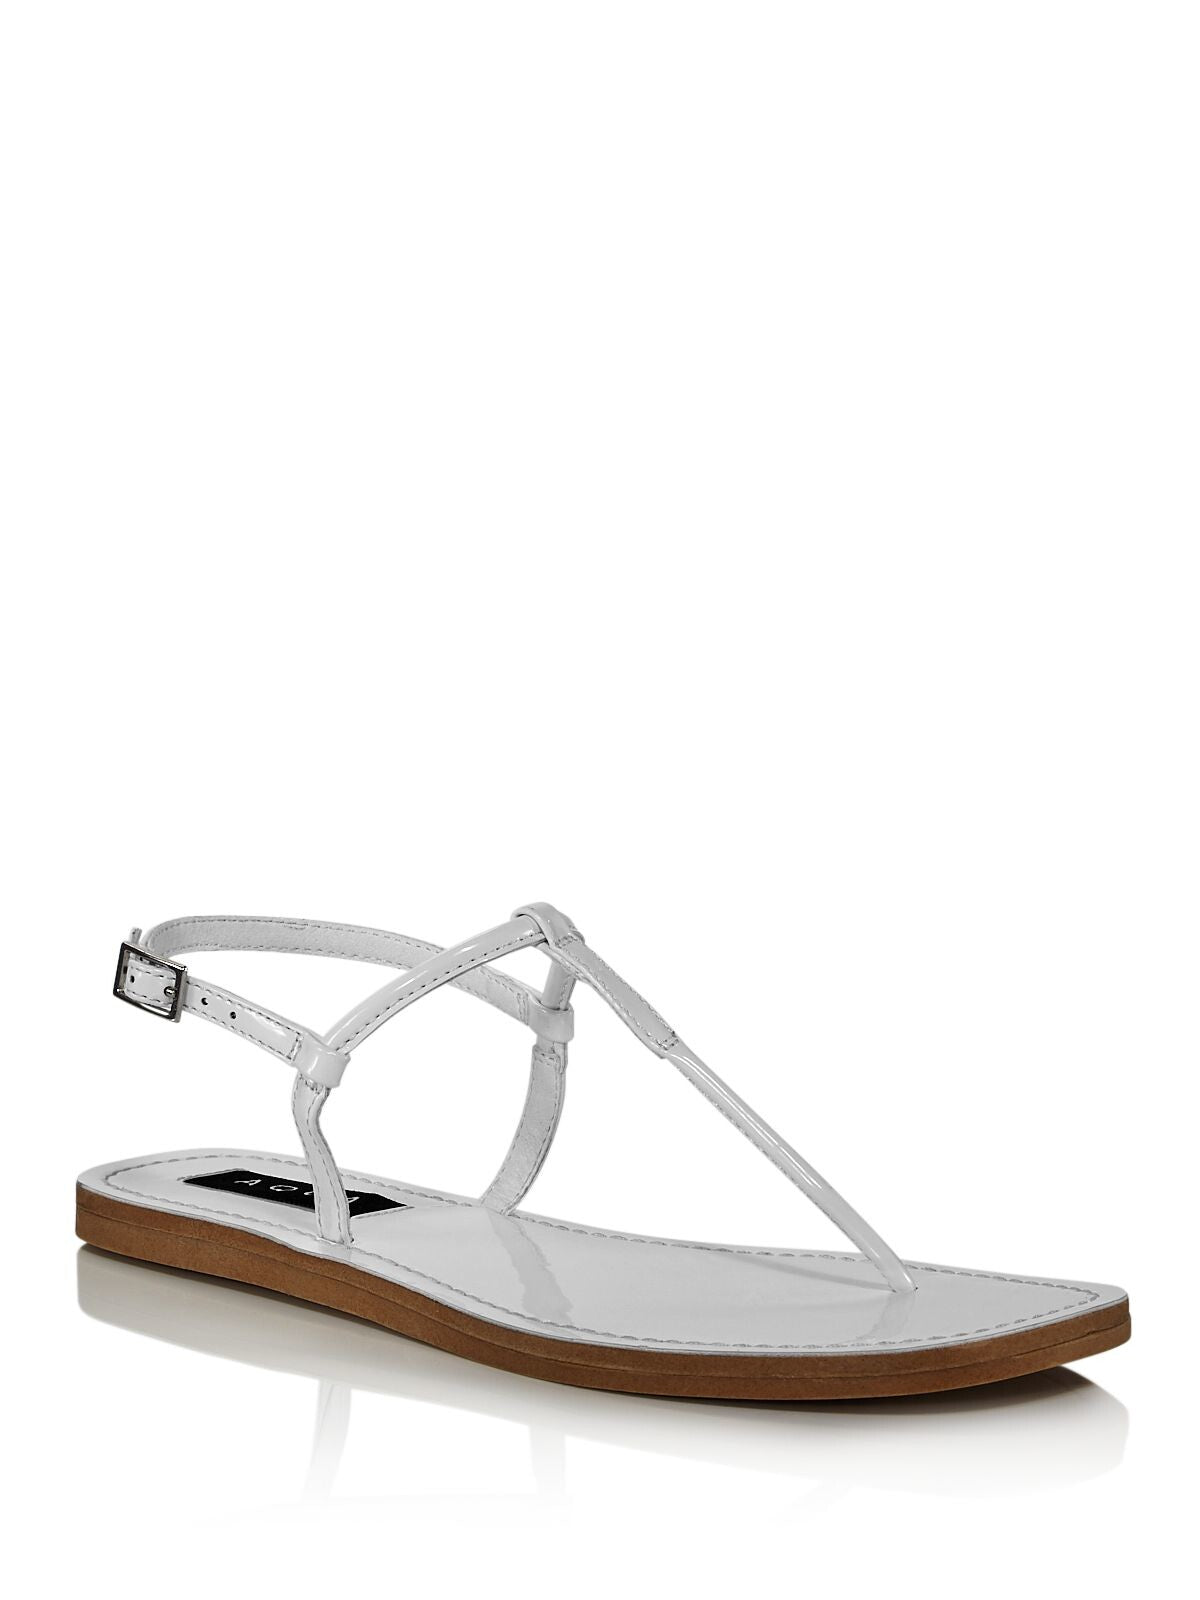 AQUA Womens White T-Strap Zen Round Toe Buckle Thong Sandals Shoes 6 M